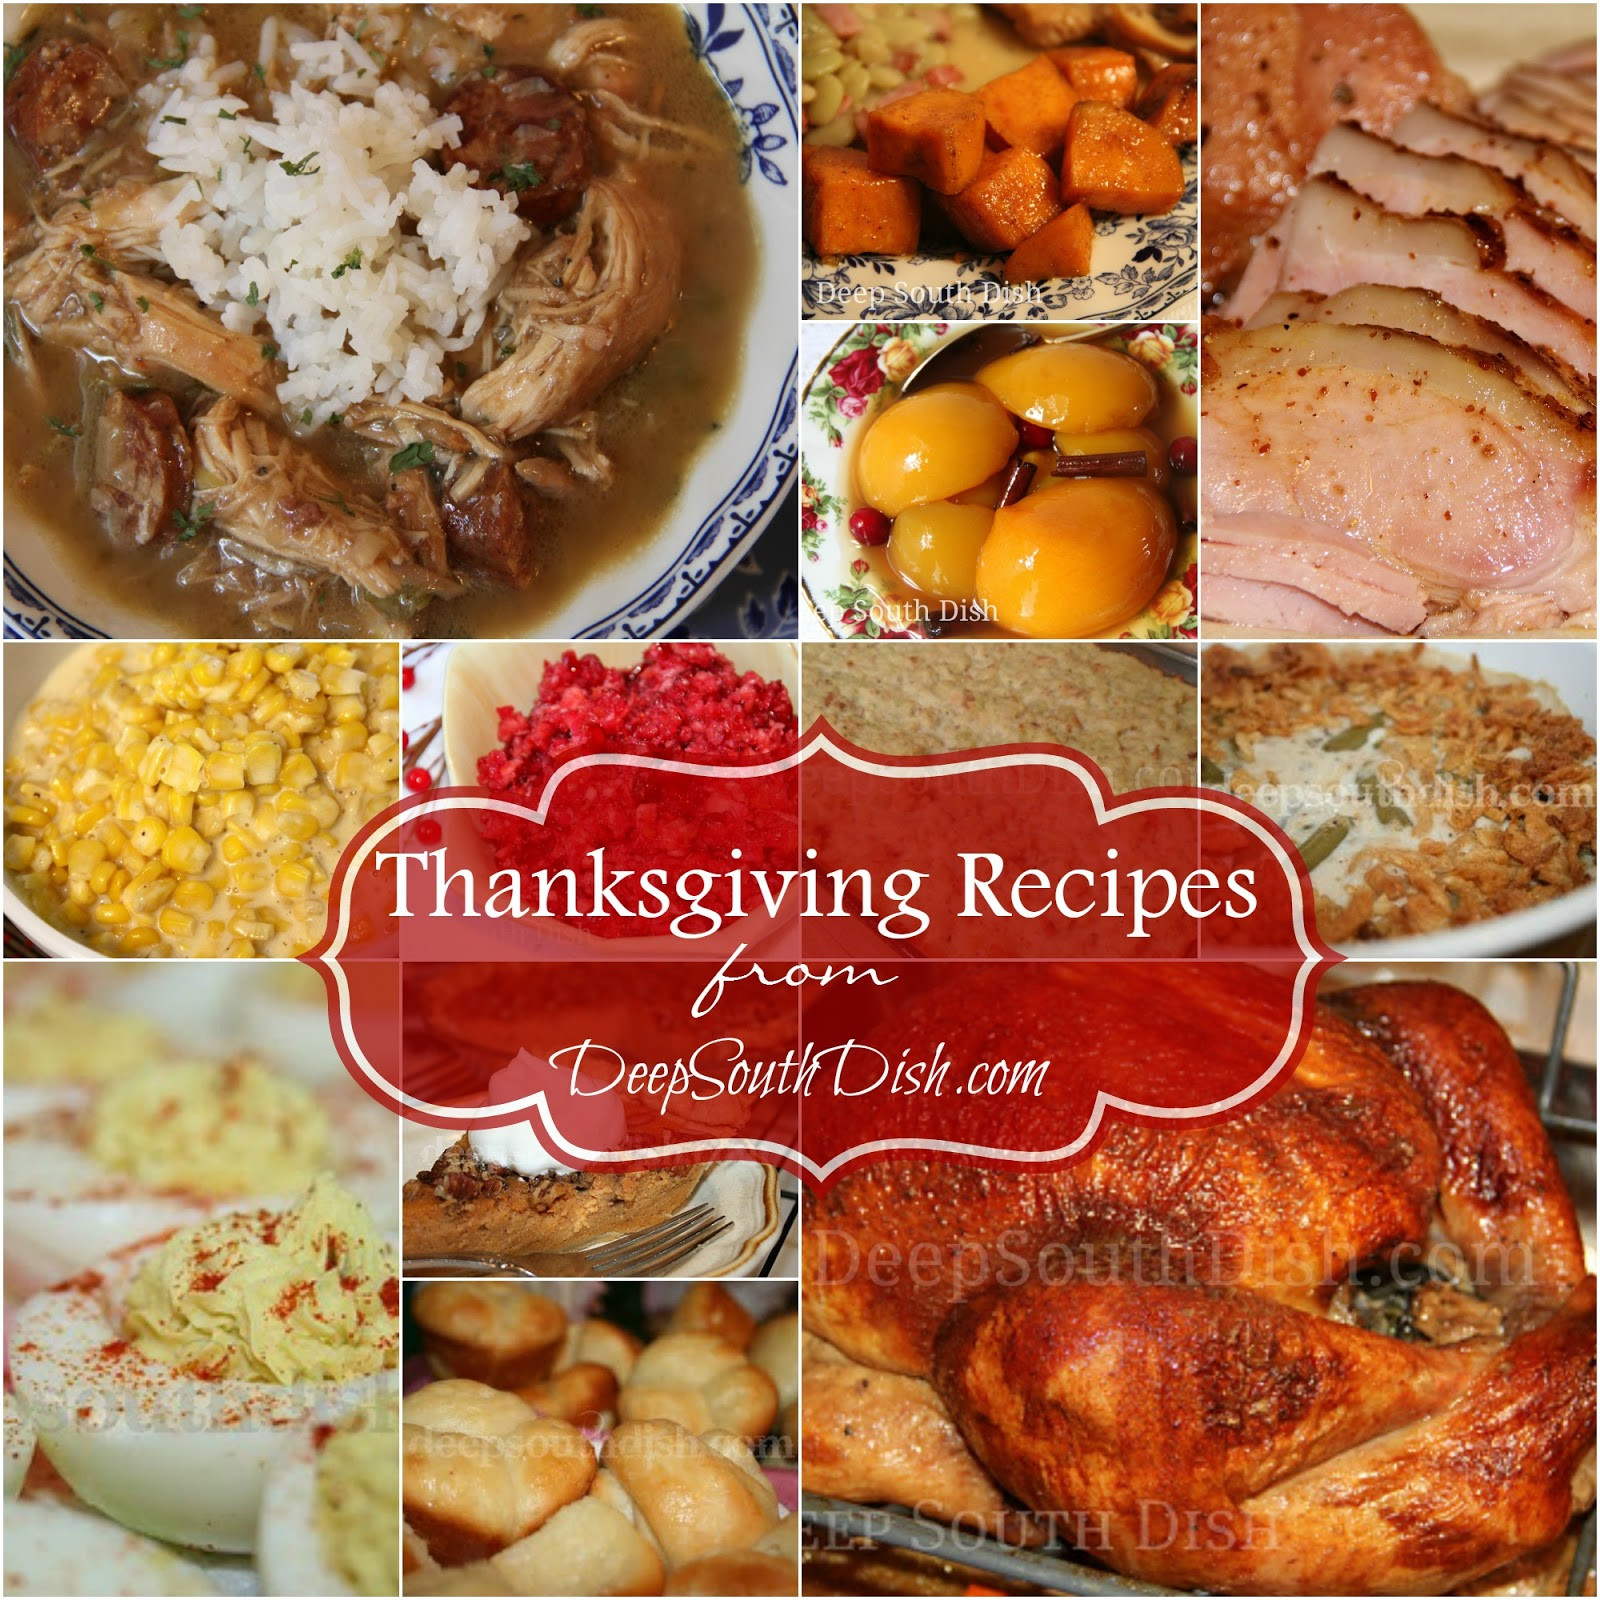 African American Thanksgiving Recipes
 Deep South Dish Deep South Southern Thanksgiving Recipes